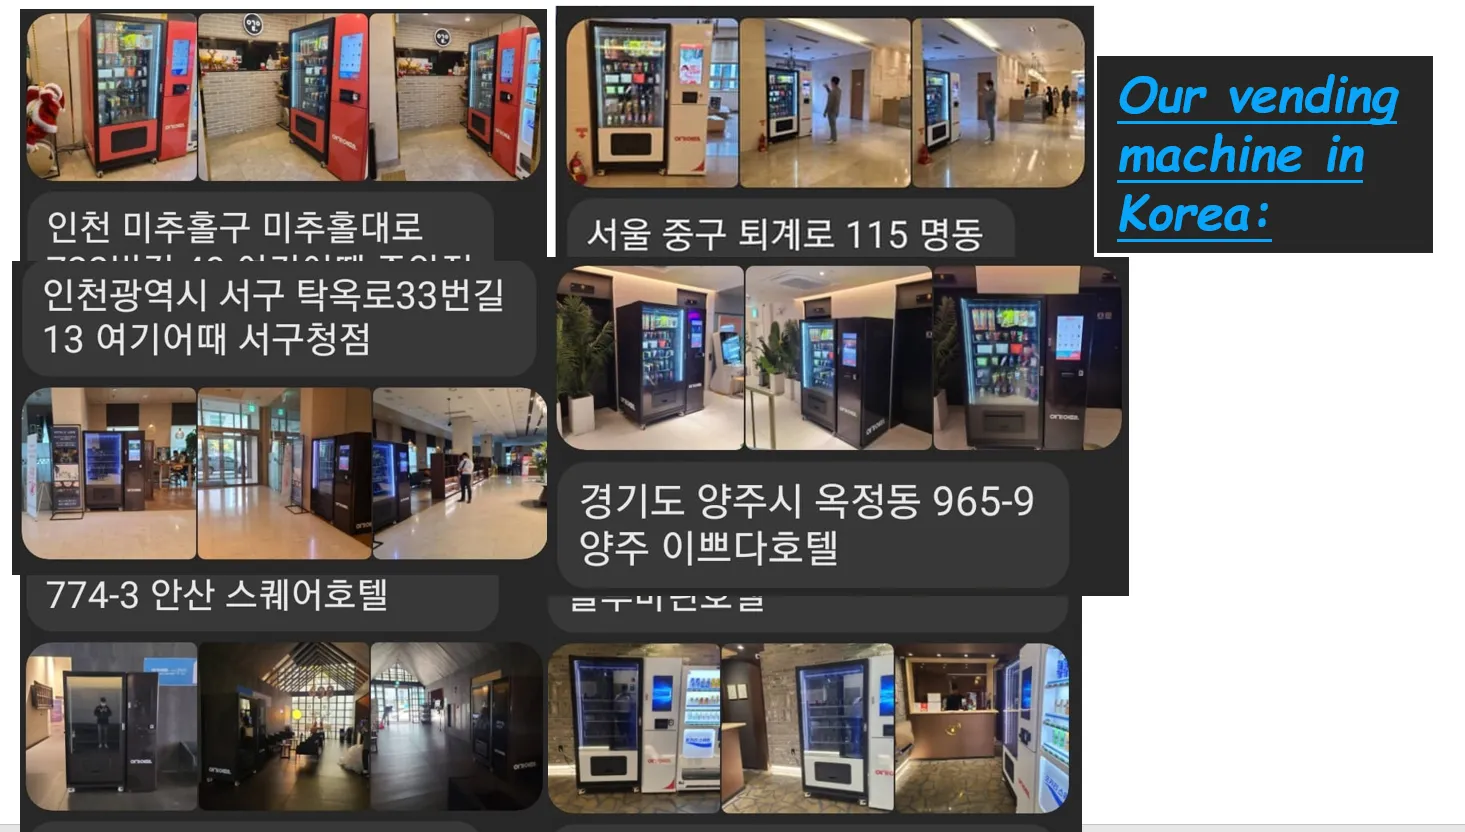 drink XY elevator vending machine for sale glass bottle